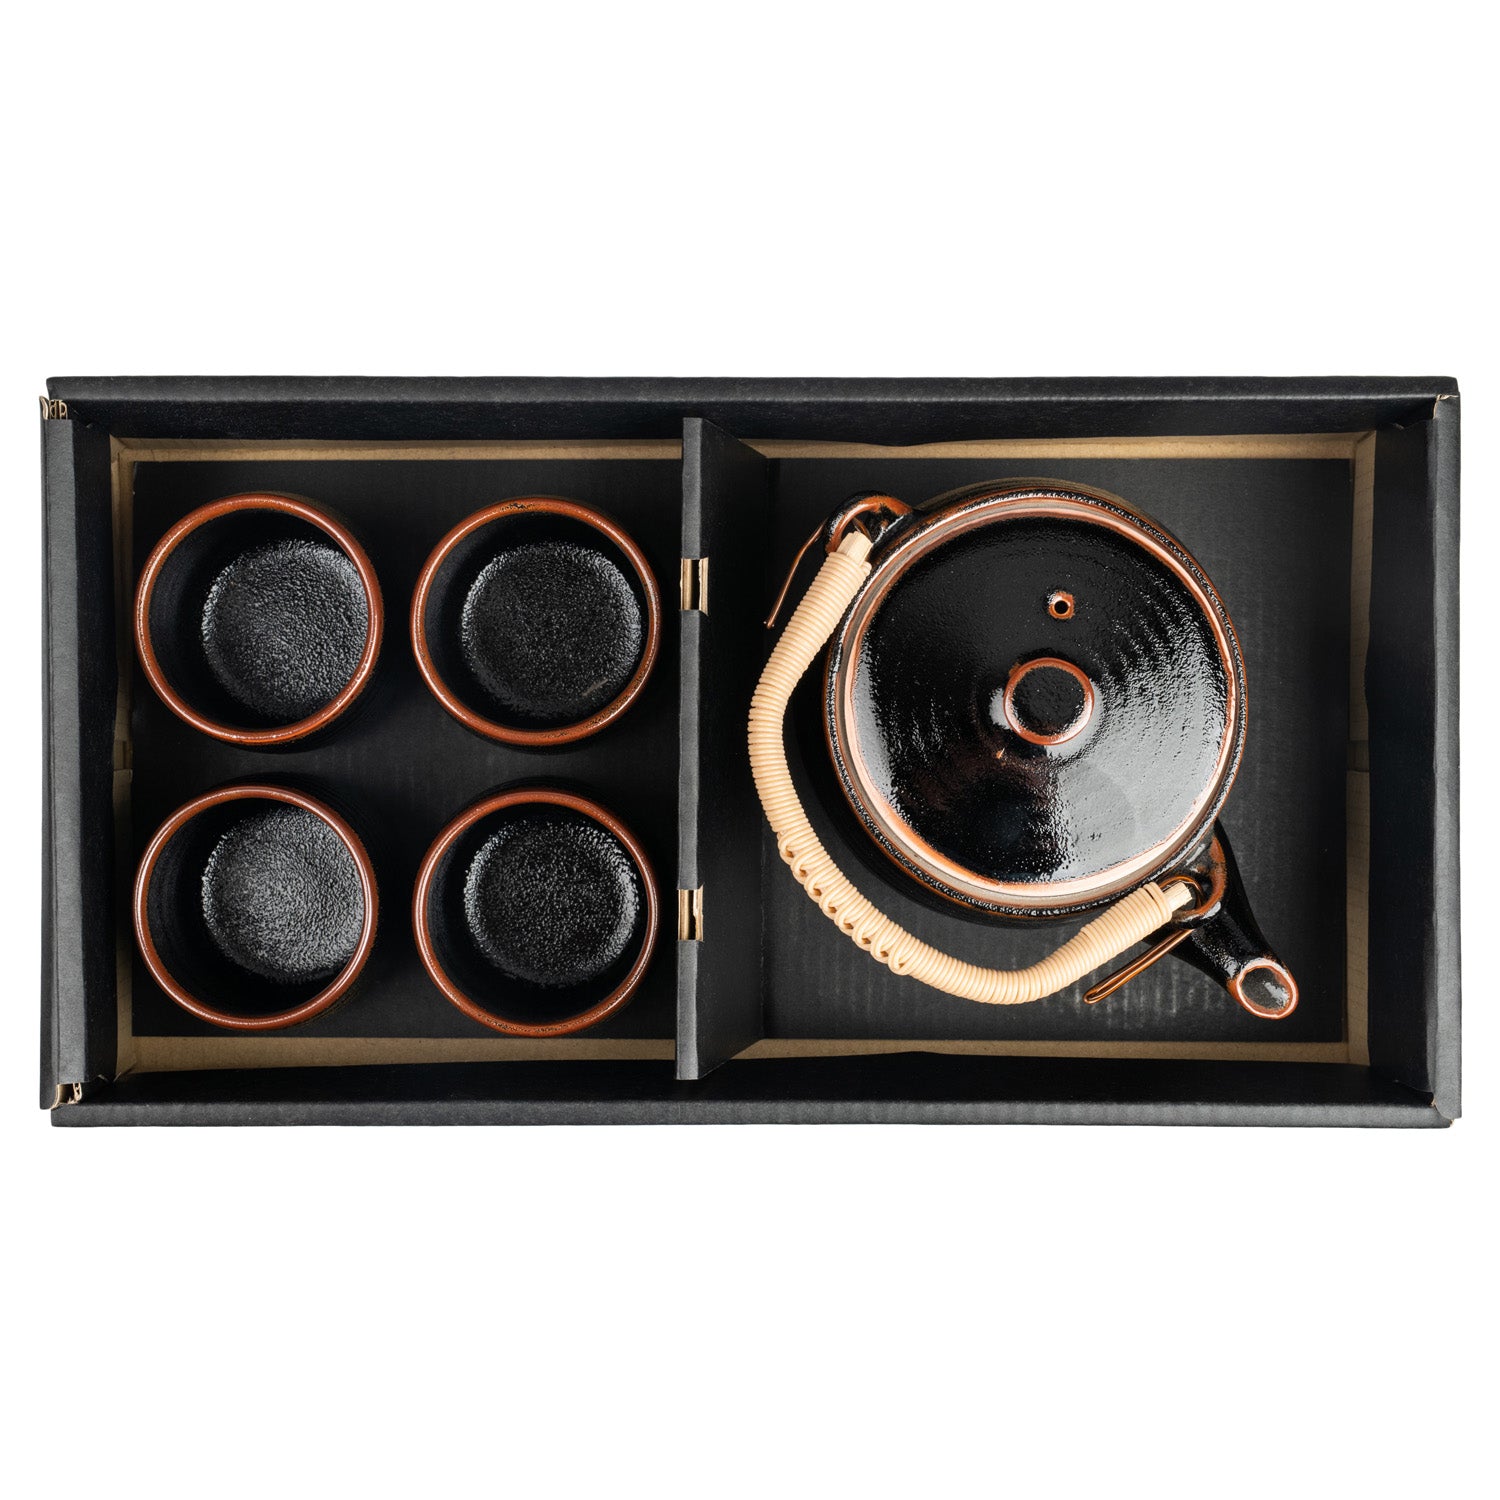 Tenmoku Black Japanese Tea Pot and Cup Gift Set in gift box